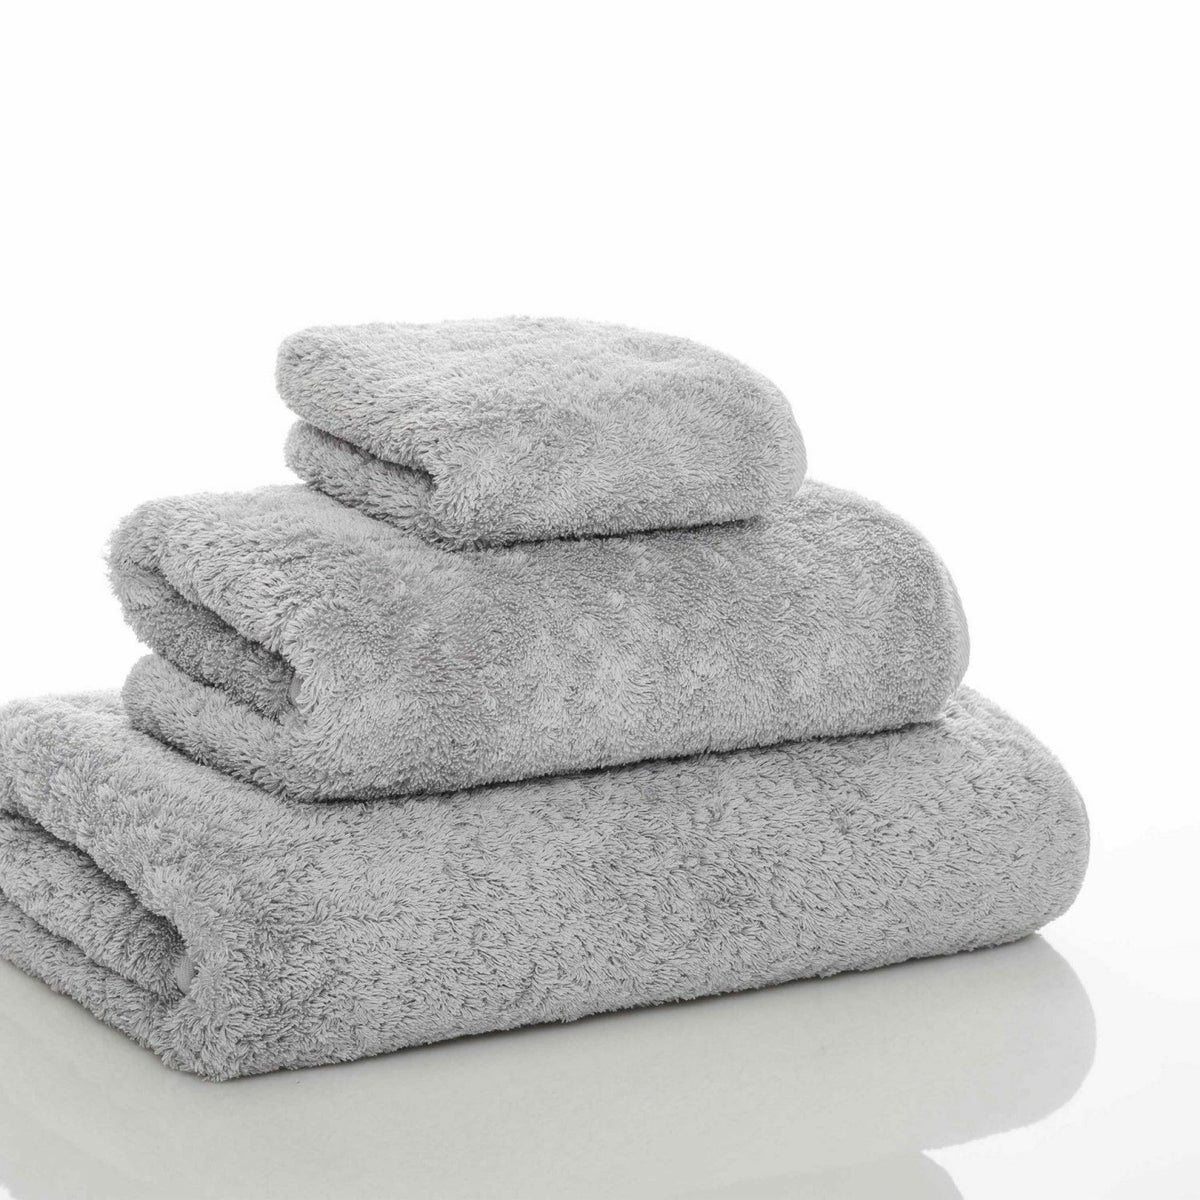 Graccioza Egoist Bath Towels Stack Silver Fine Linens 